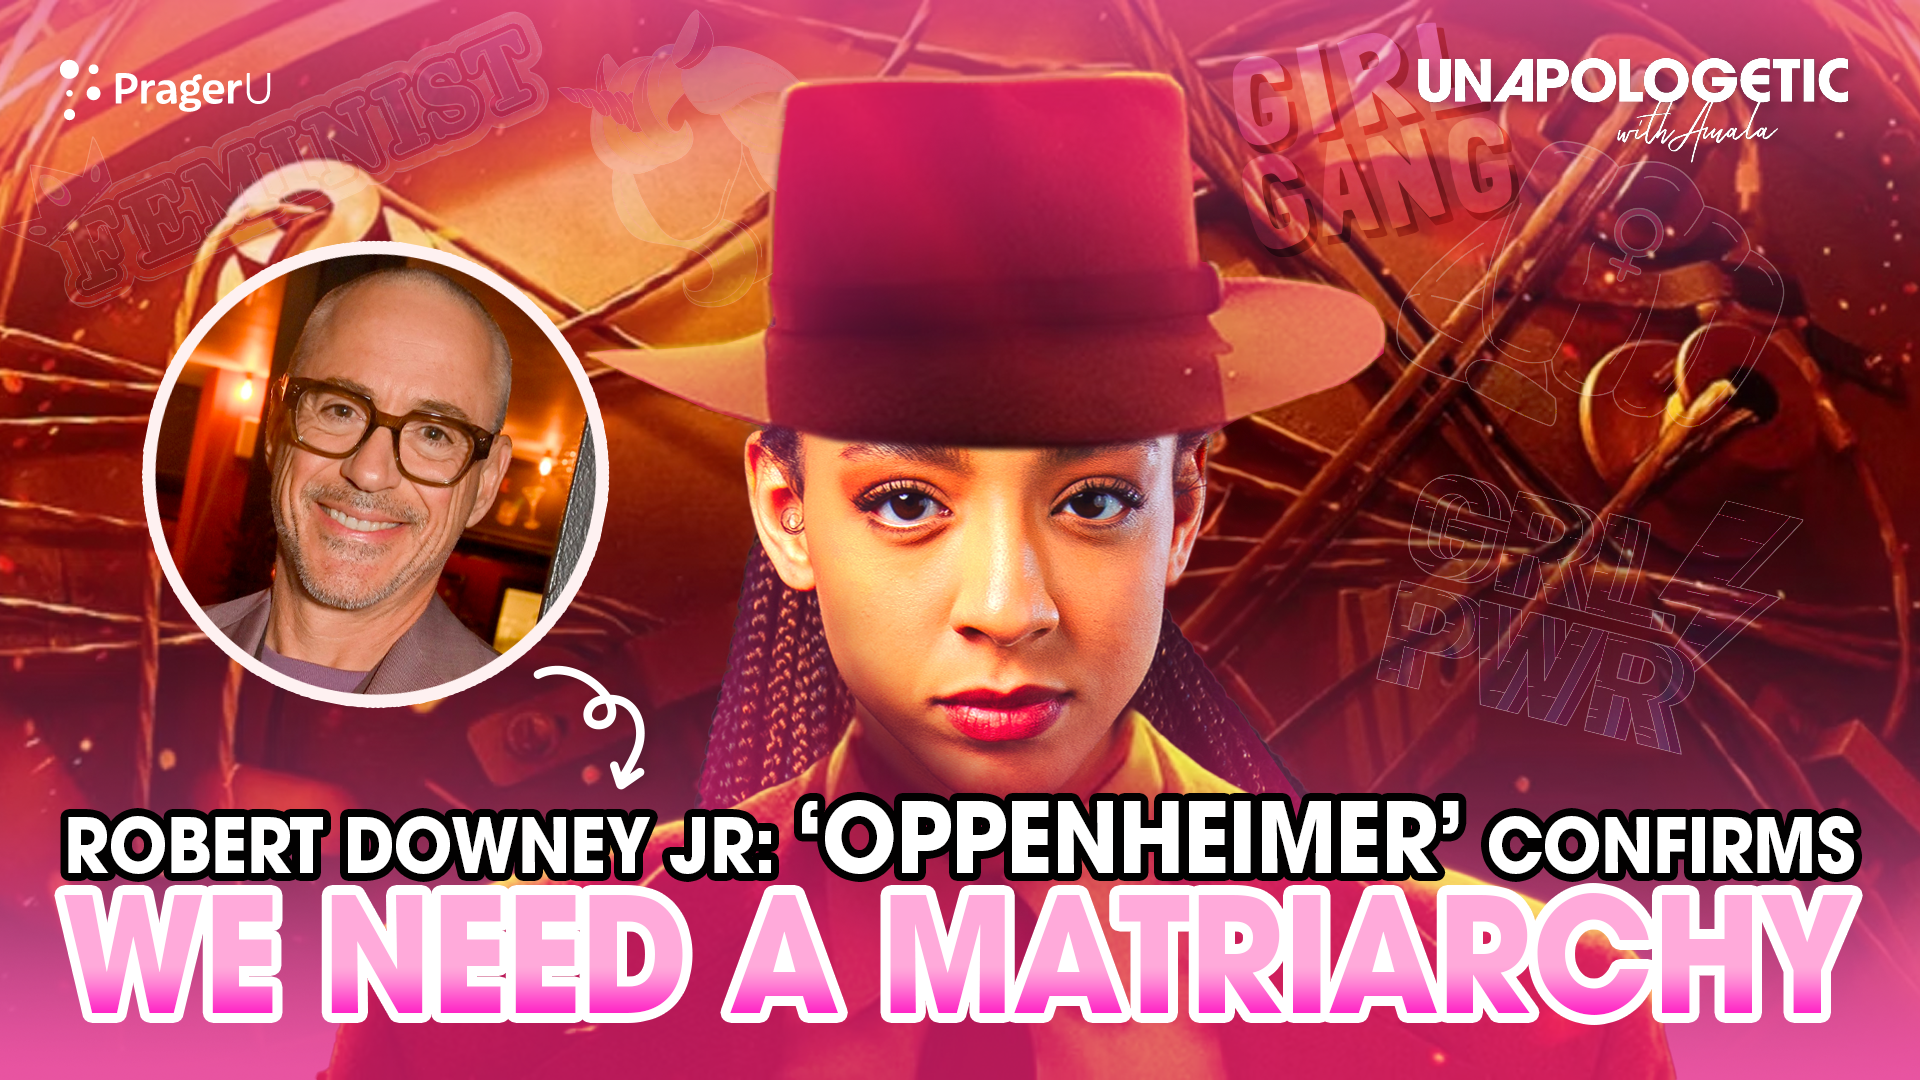 Robert Downey Jr: Oppenheimer Confirms We Need a Matriarchy